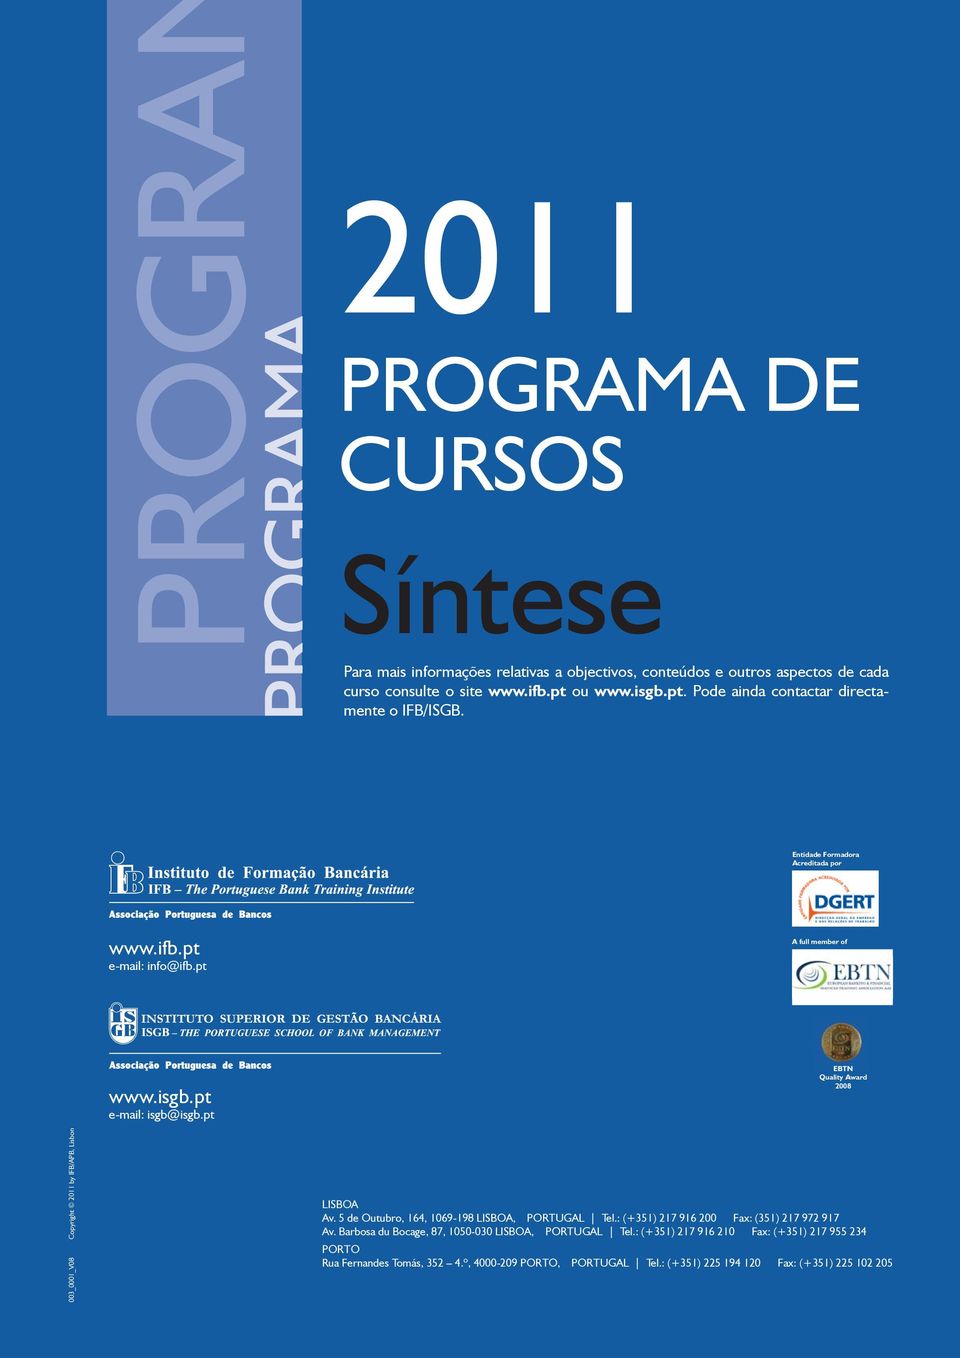 pt EBTN Quality Award 2008 Copyright 2011 by IFB/APB, Lisbon 003_0001_V08 LISBOA Av. 5 de Outubro, 164, 1069-198 LISBOA, PORTUGAL Tel.